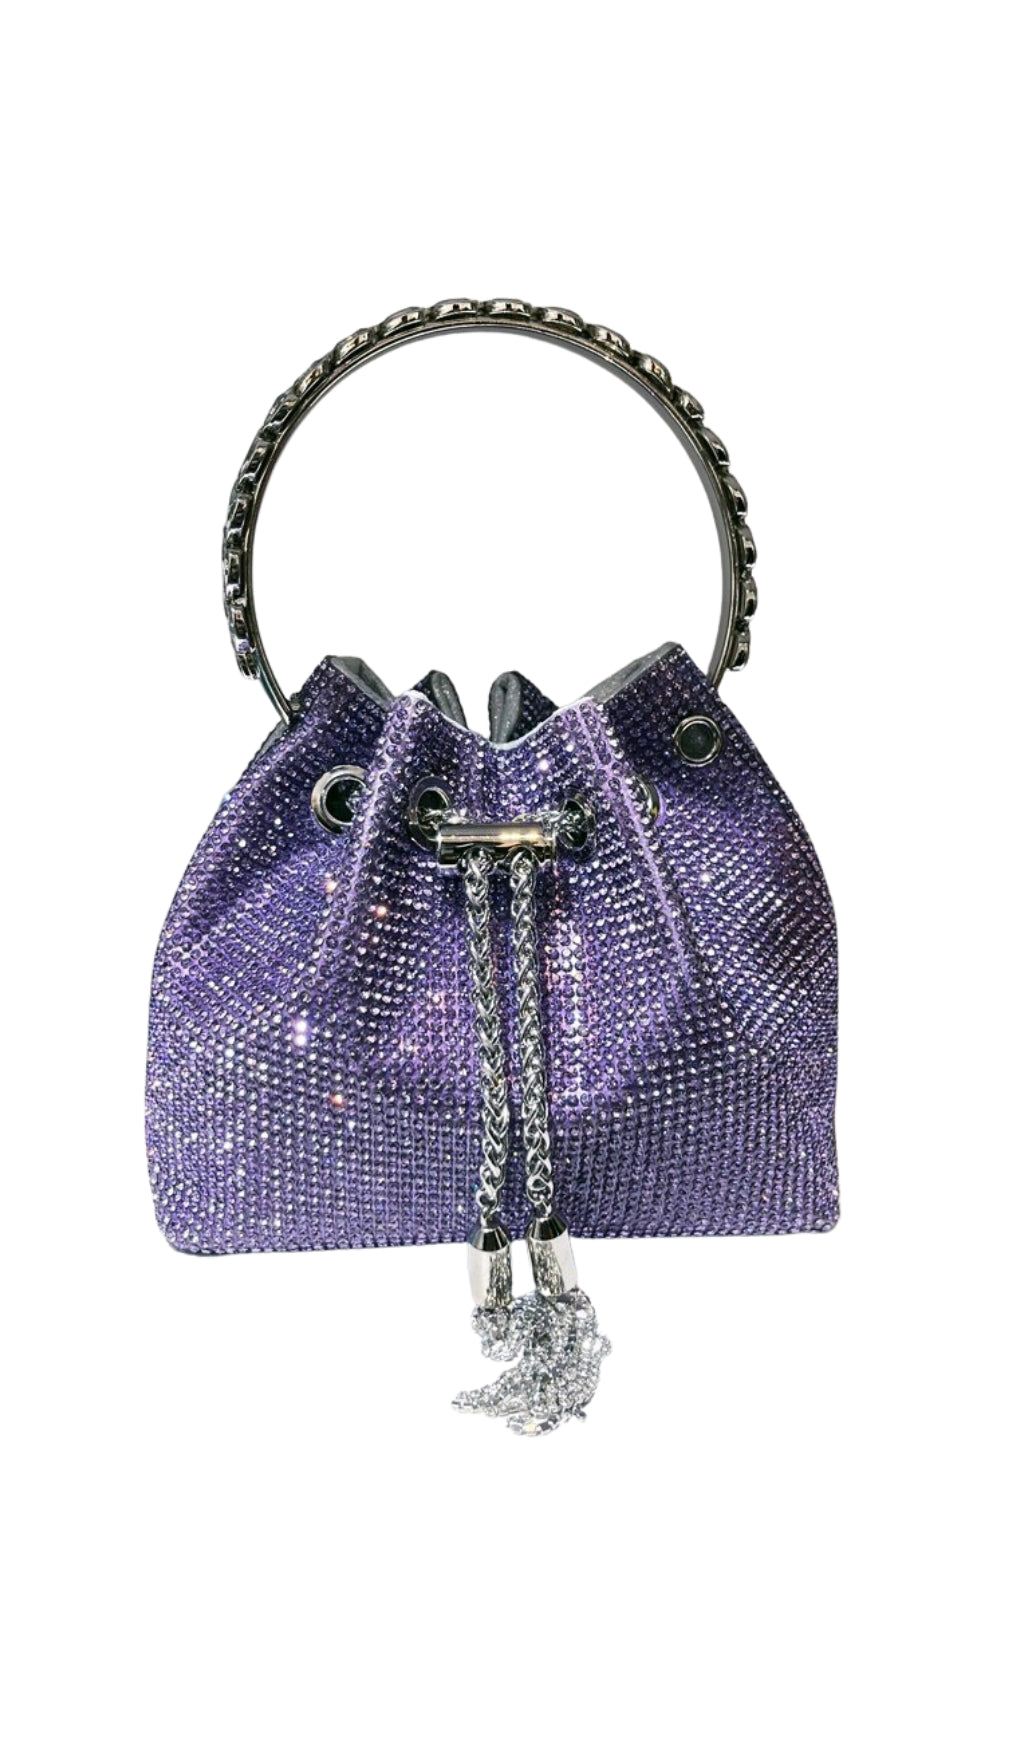 CRYSTAL EMBELLISHED BUCKET BAG IN PURPLE | Fashionslee